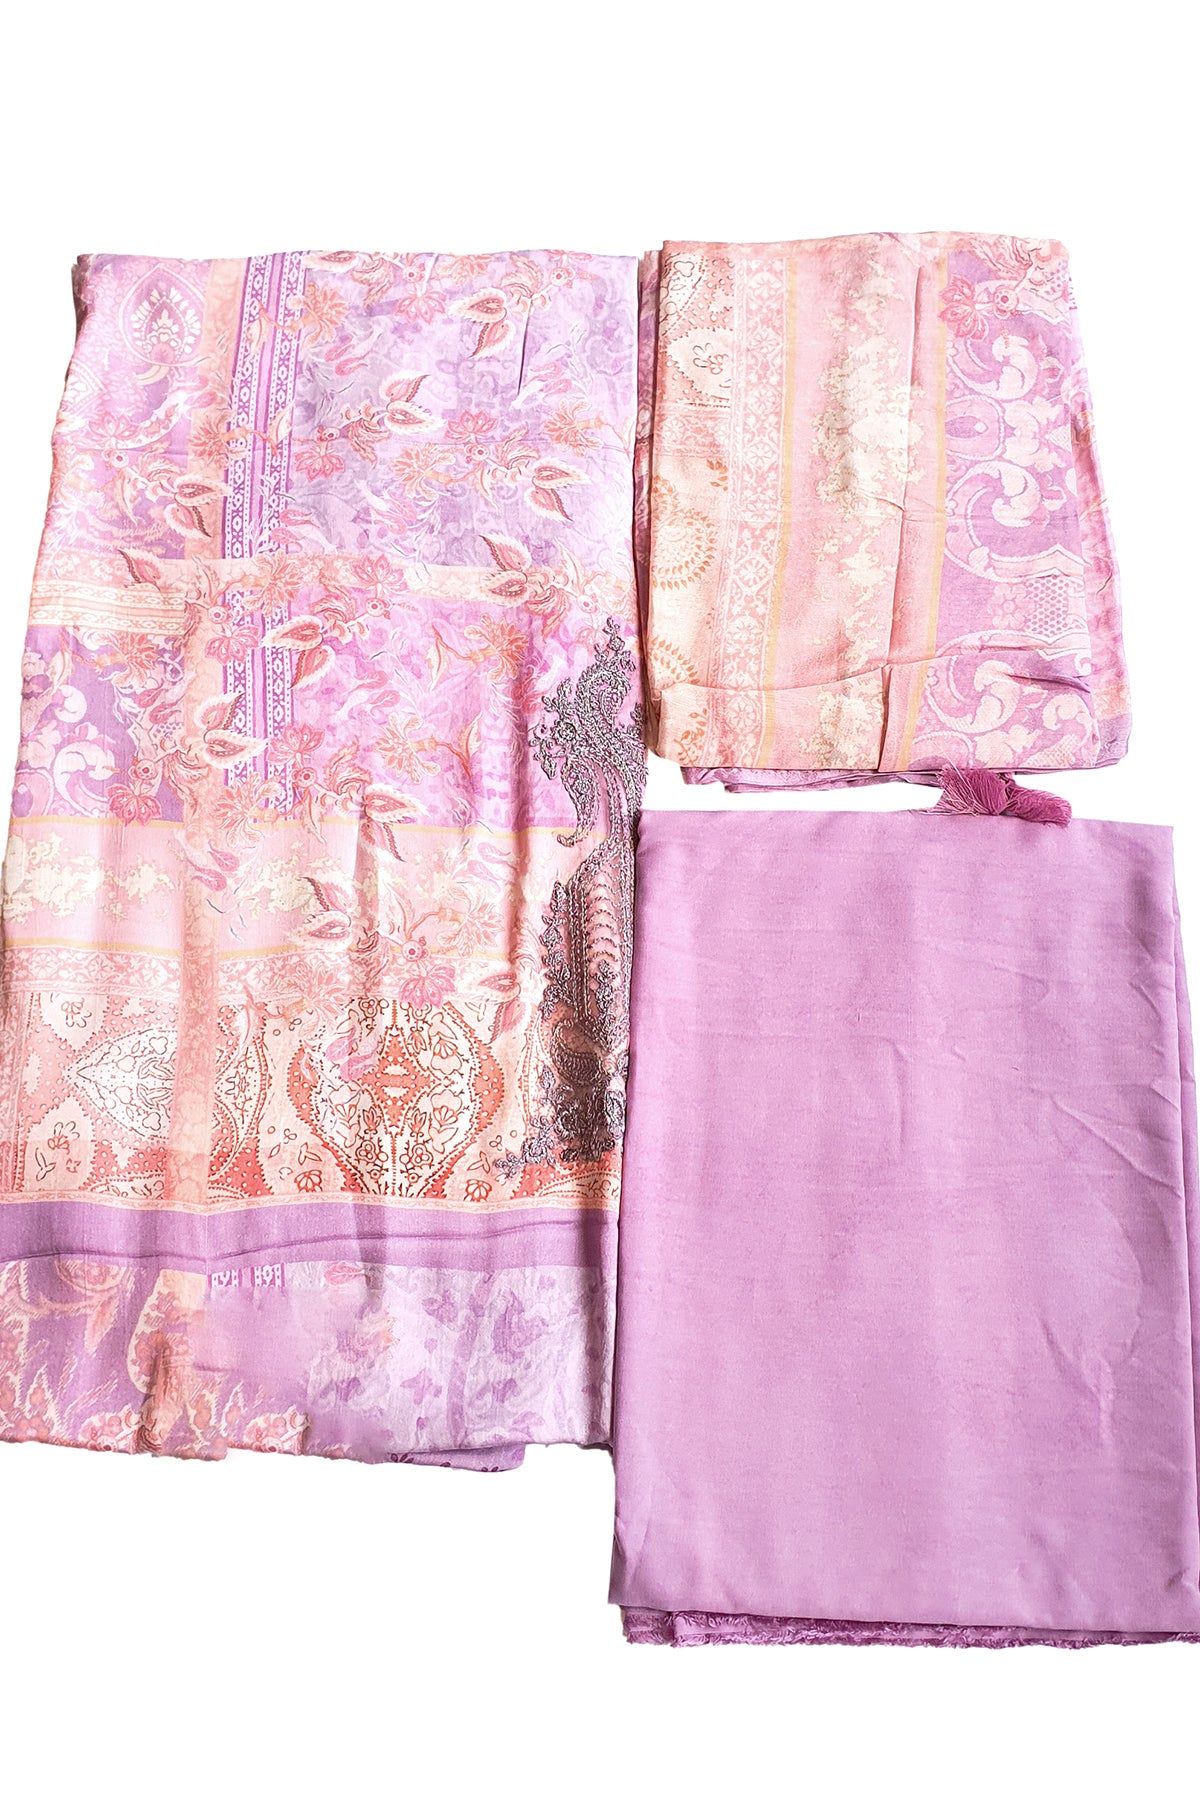 Mauve Modal Satin Printed Threadwork and Zari Embroidered Suit Set